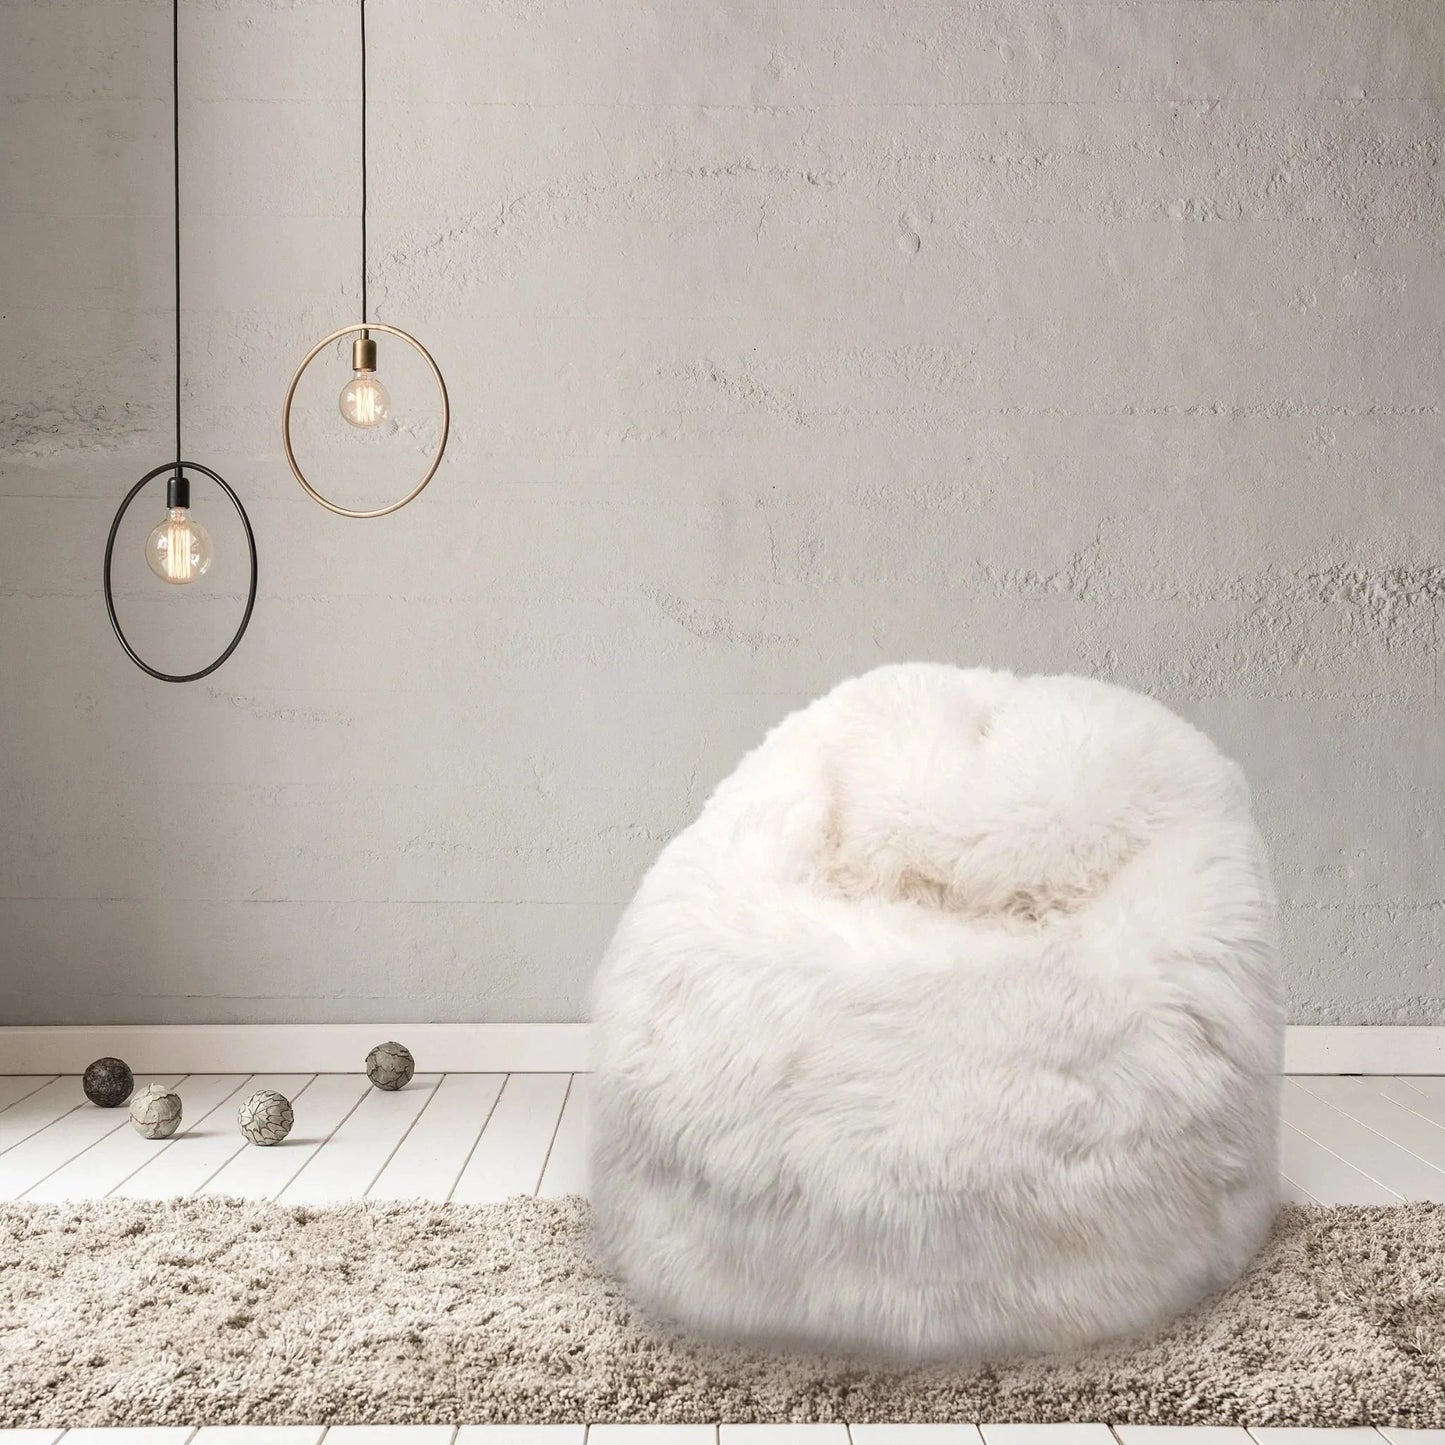 EX-DISPLAY Sheepskin Beanbag Chair 100% Natural British White Soft Fleece Junior IN STOCK - Wildash London